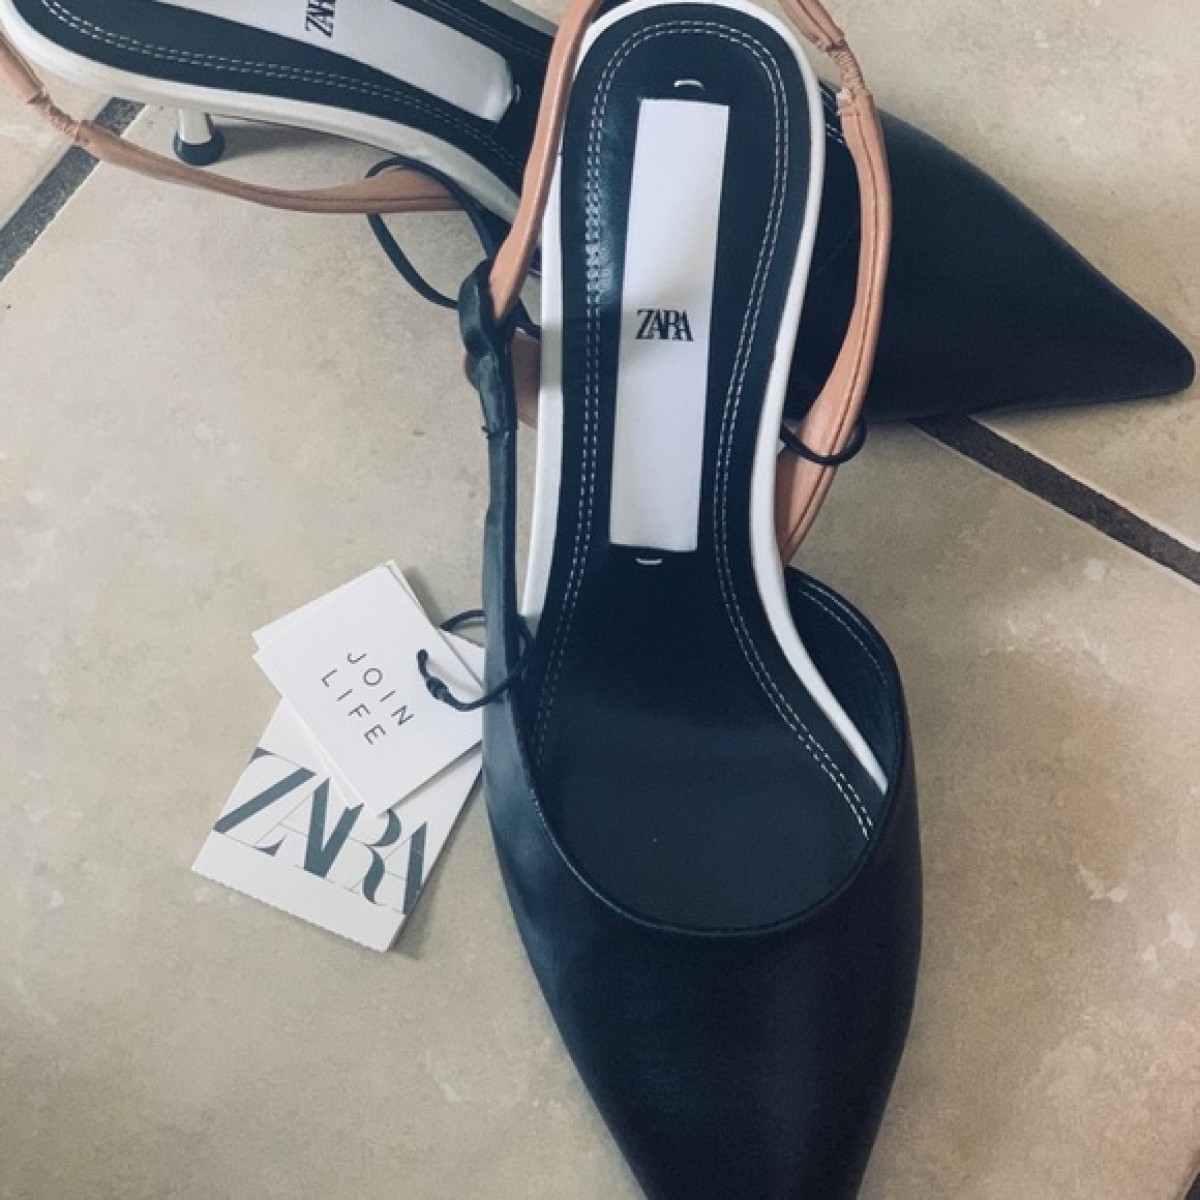 New Zara brand shoes